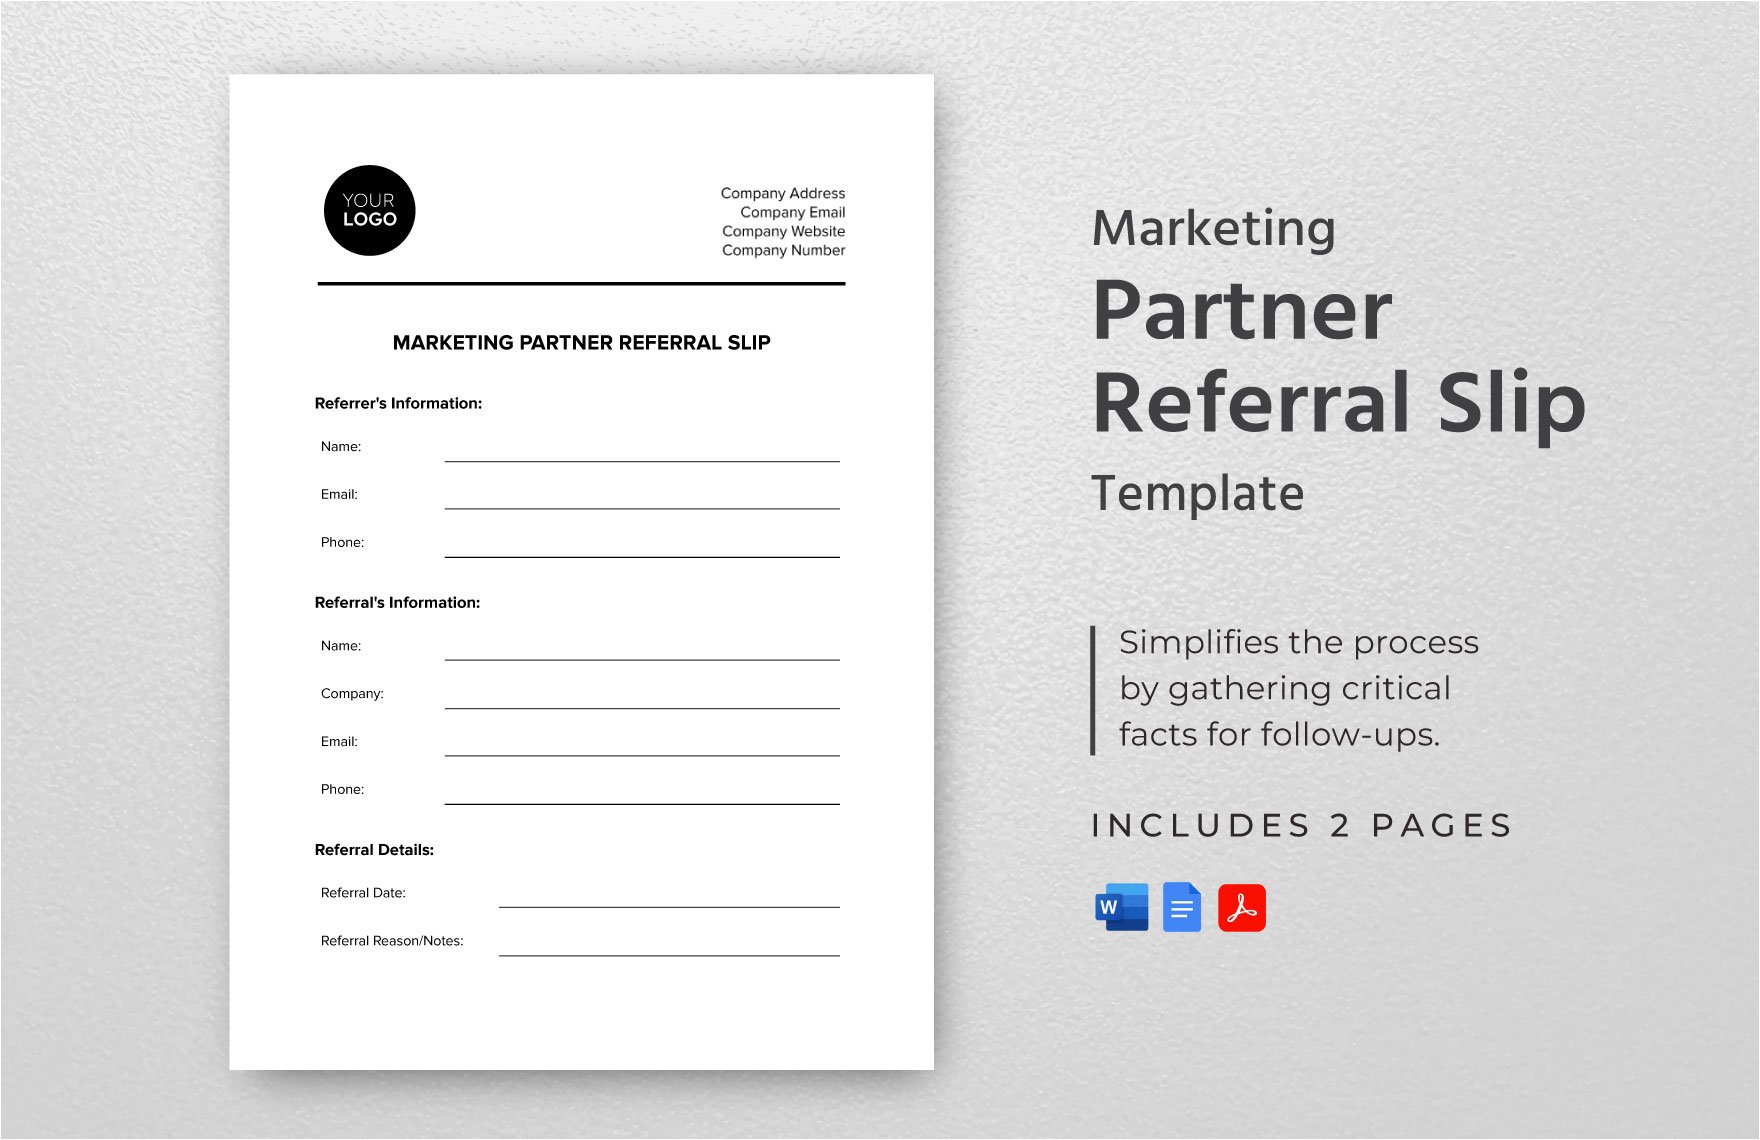 Marketing Partner Referral Slip Template in Word, Google Docs, PDF